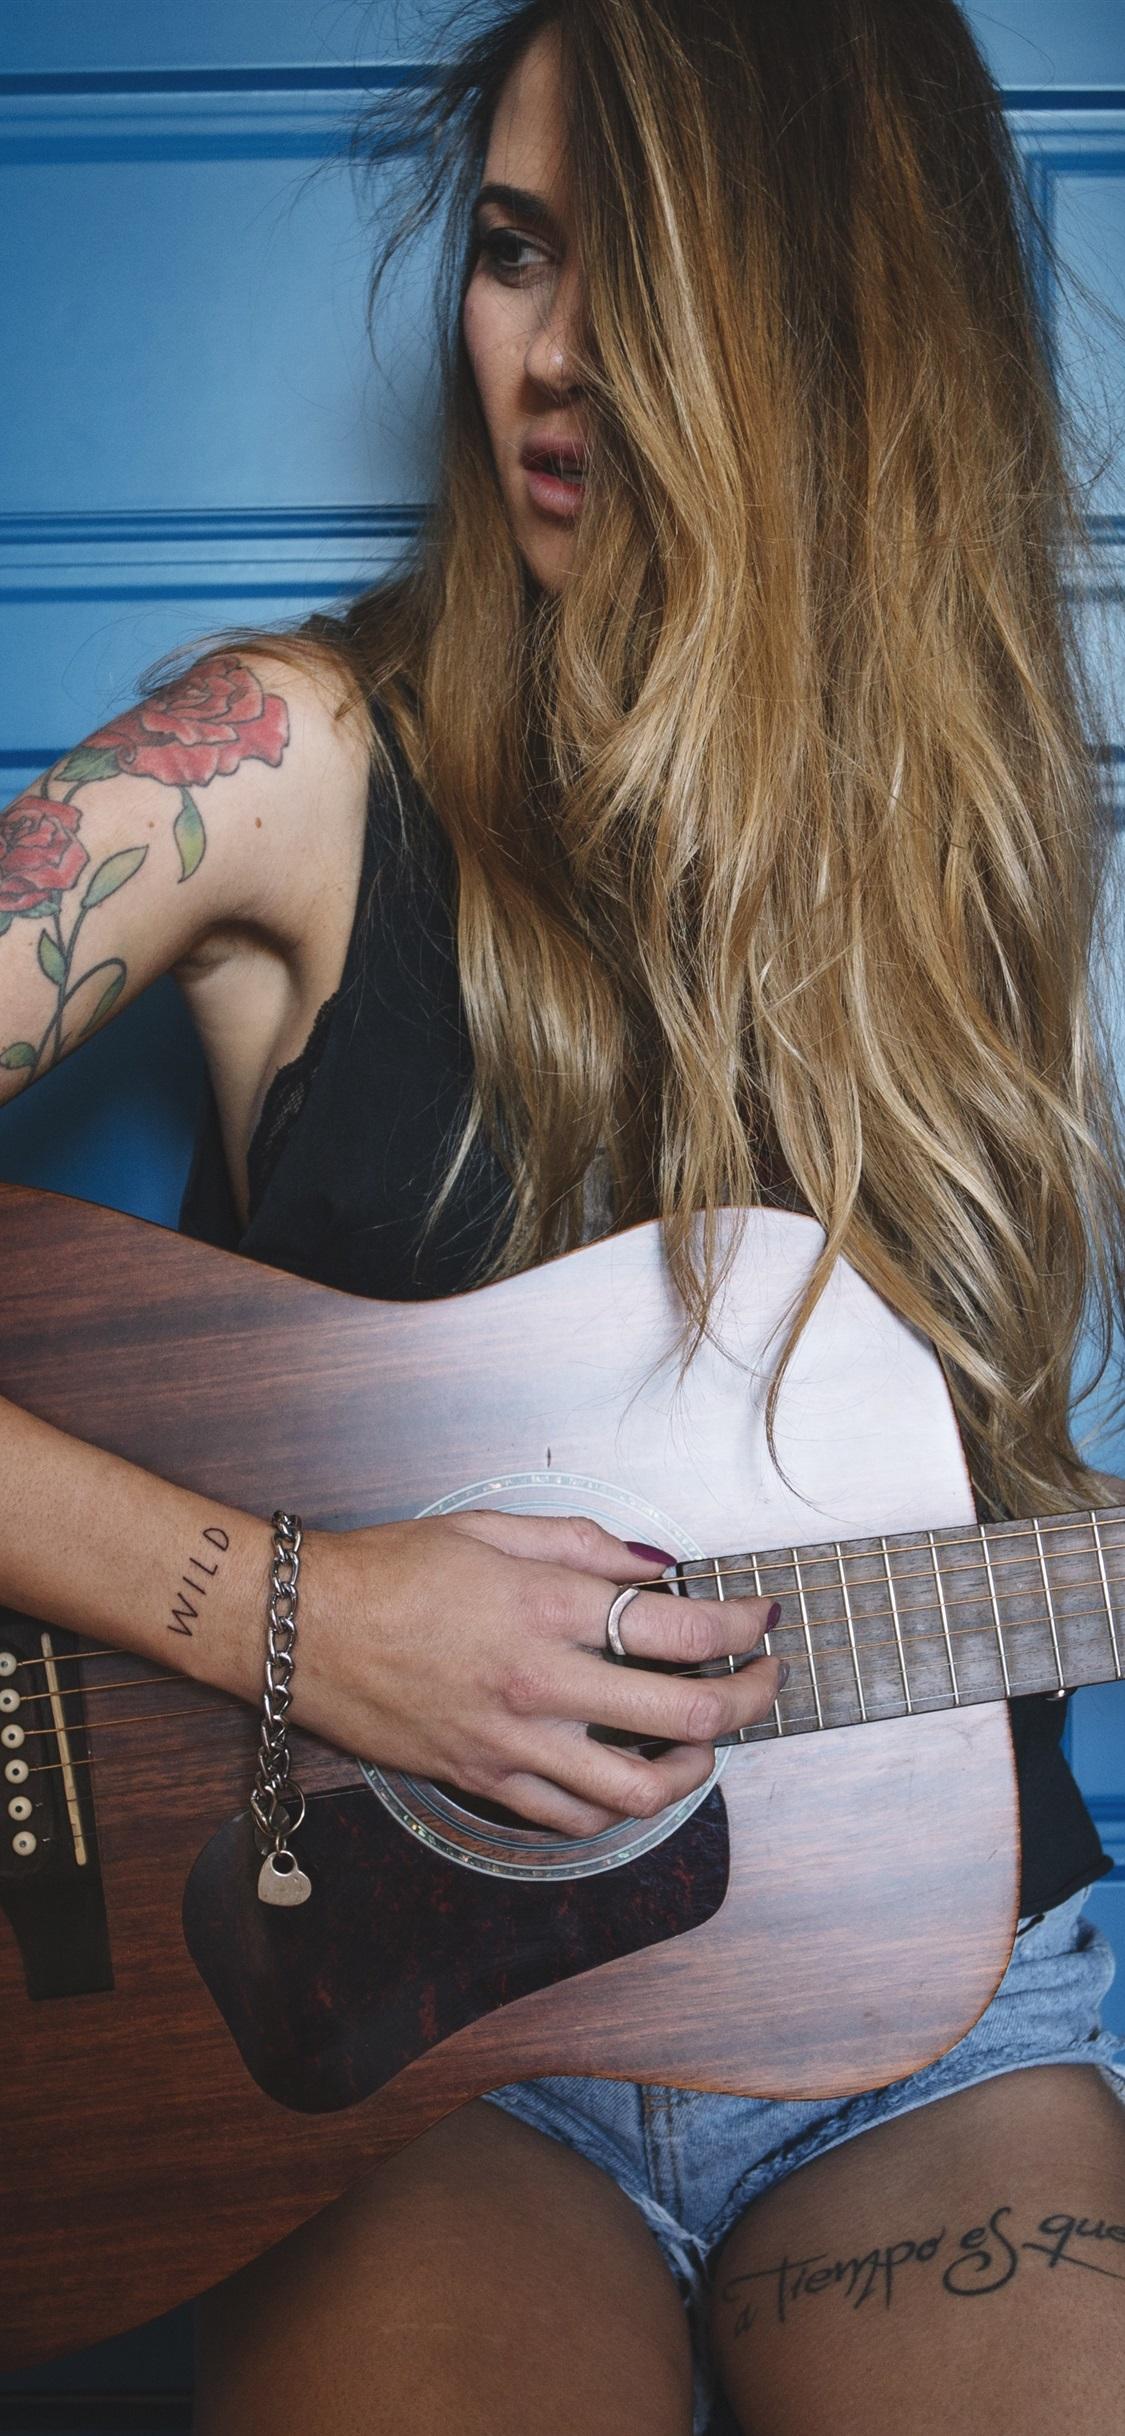 Long Hair Girl Play Guitar, Tattoo 1125x2436 IPhone XS X